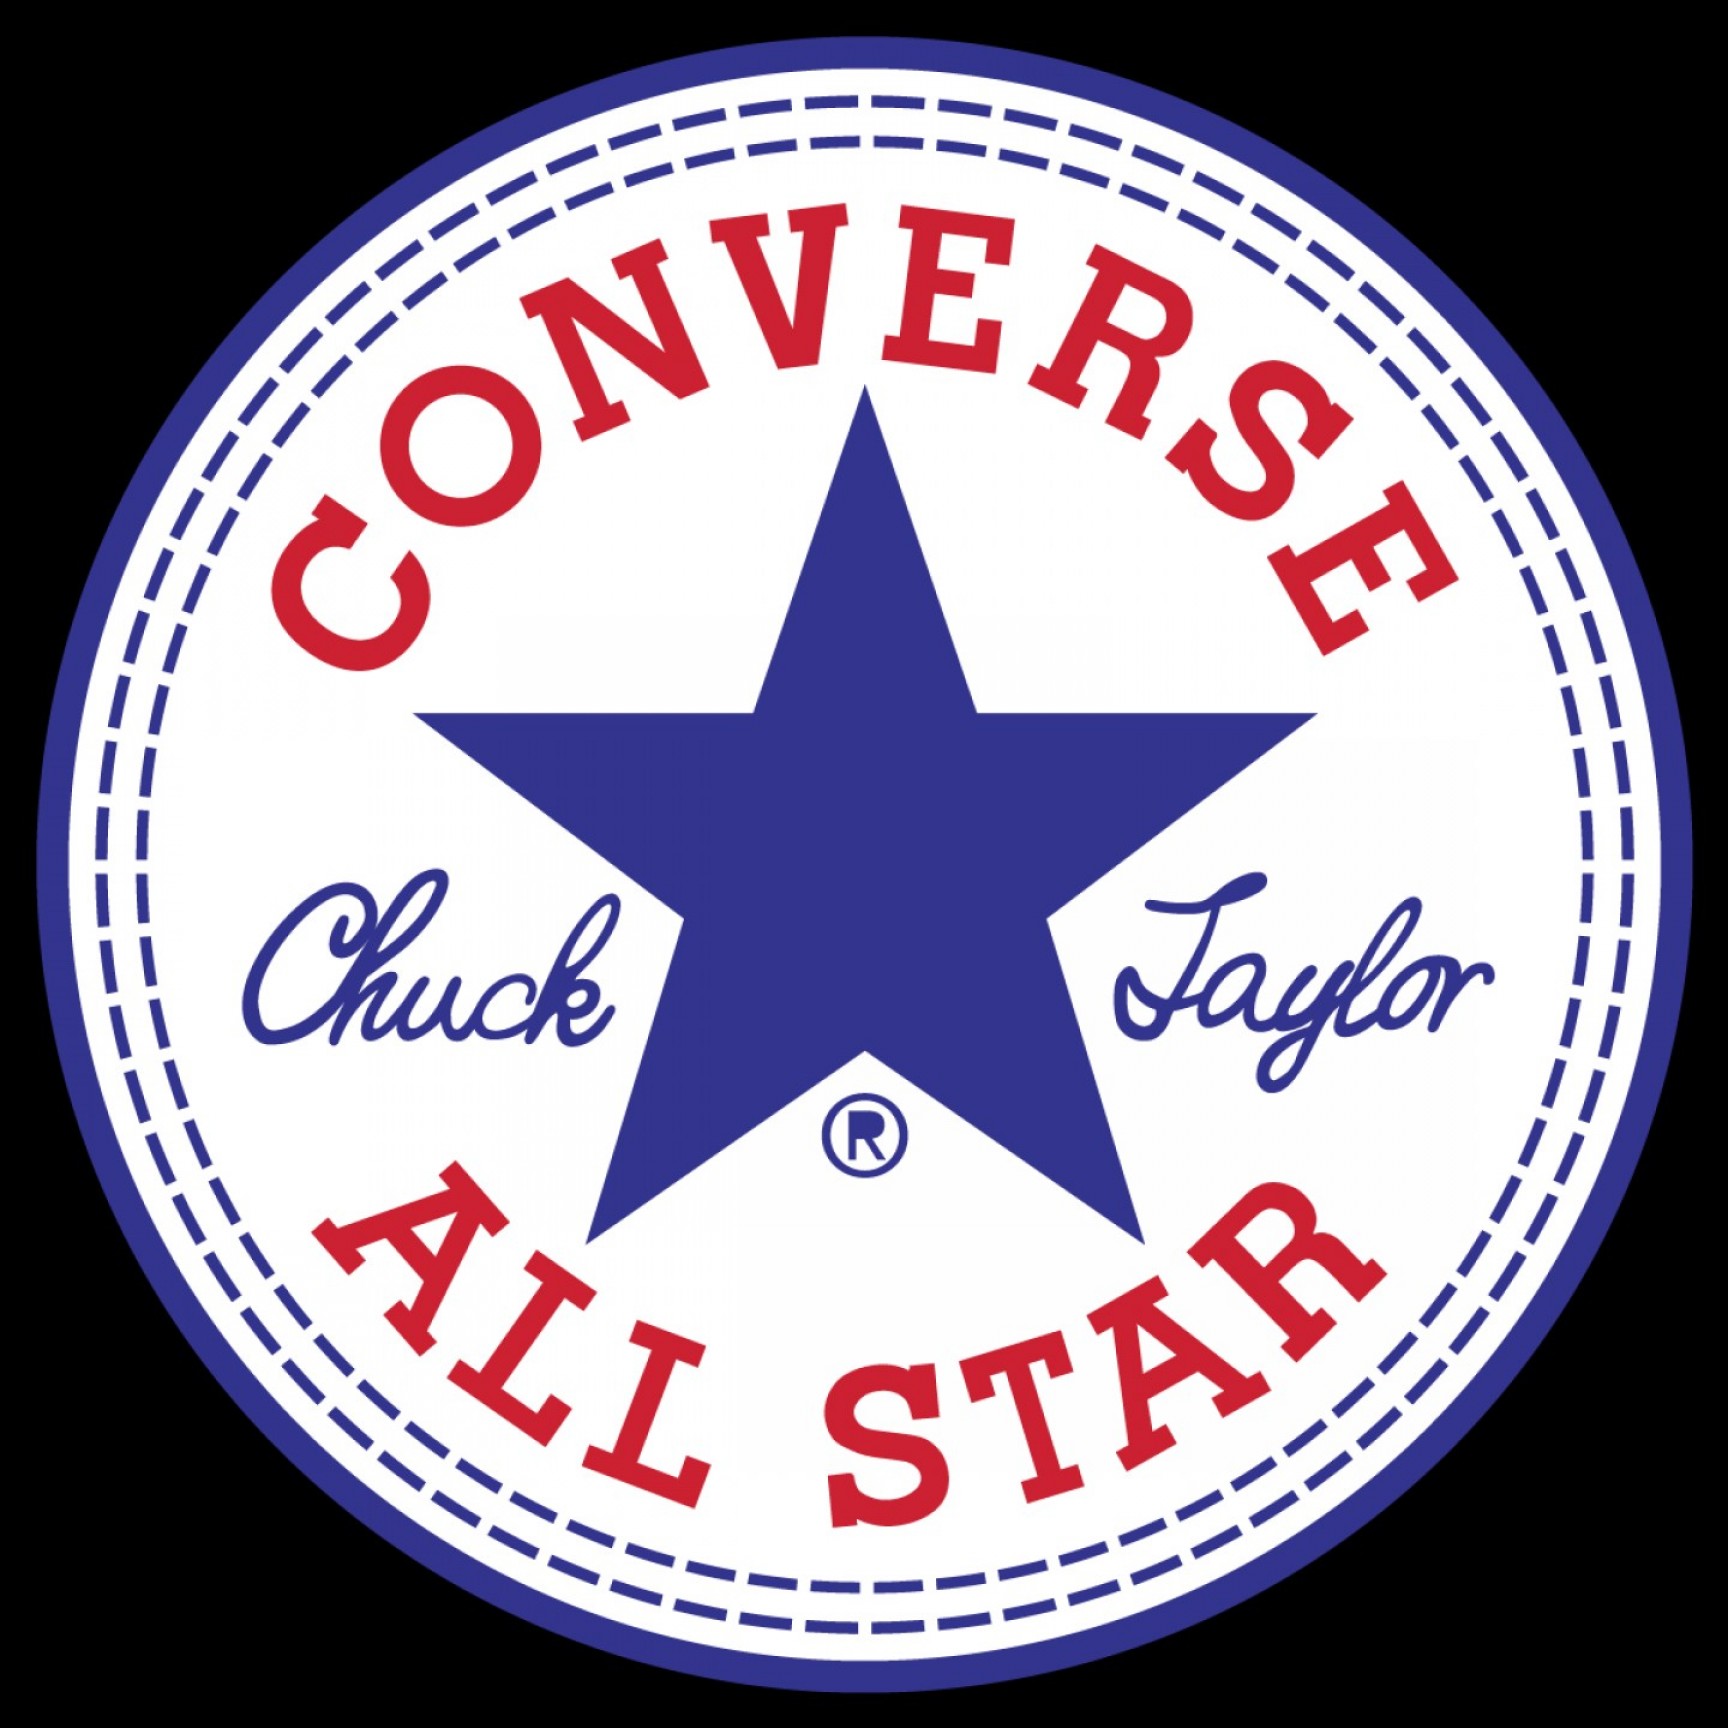 converse chuck taylor all star logo